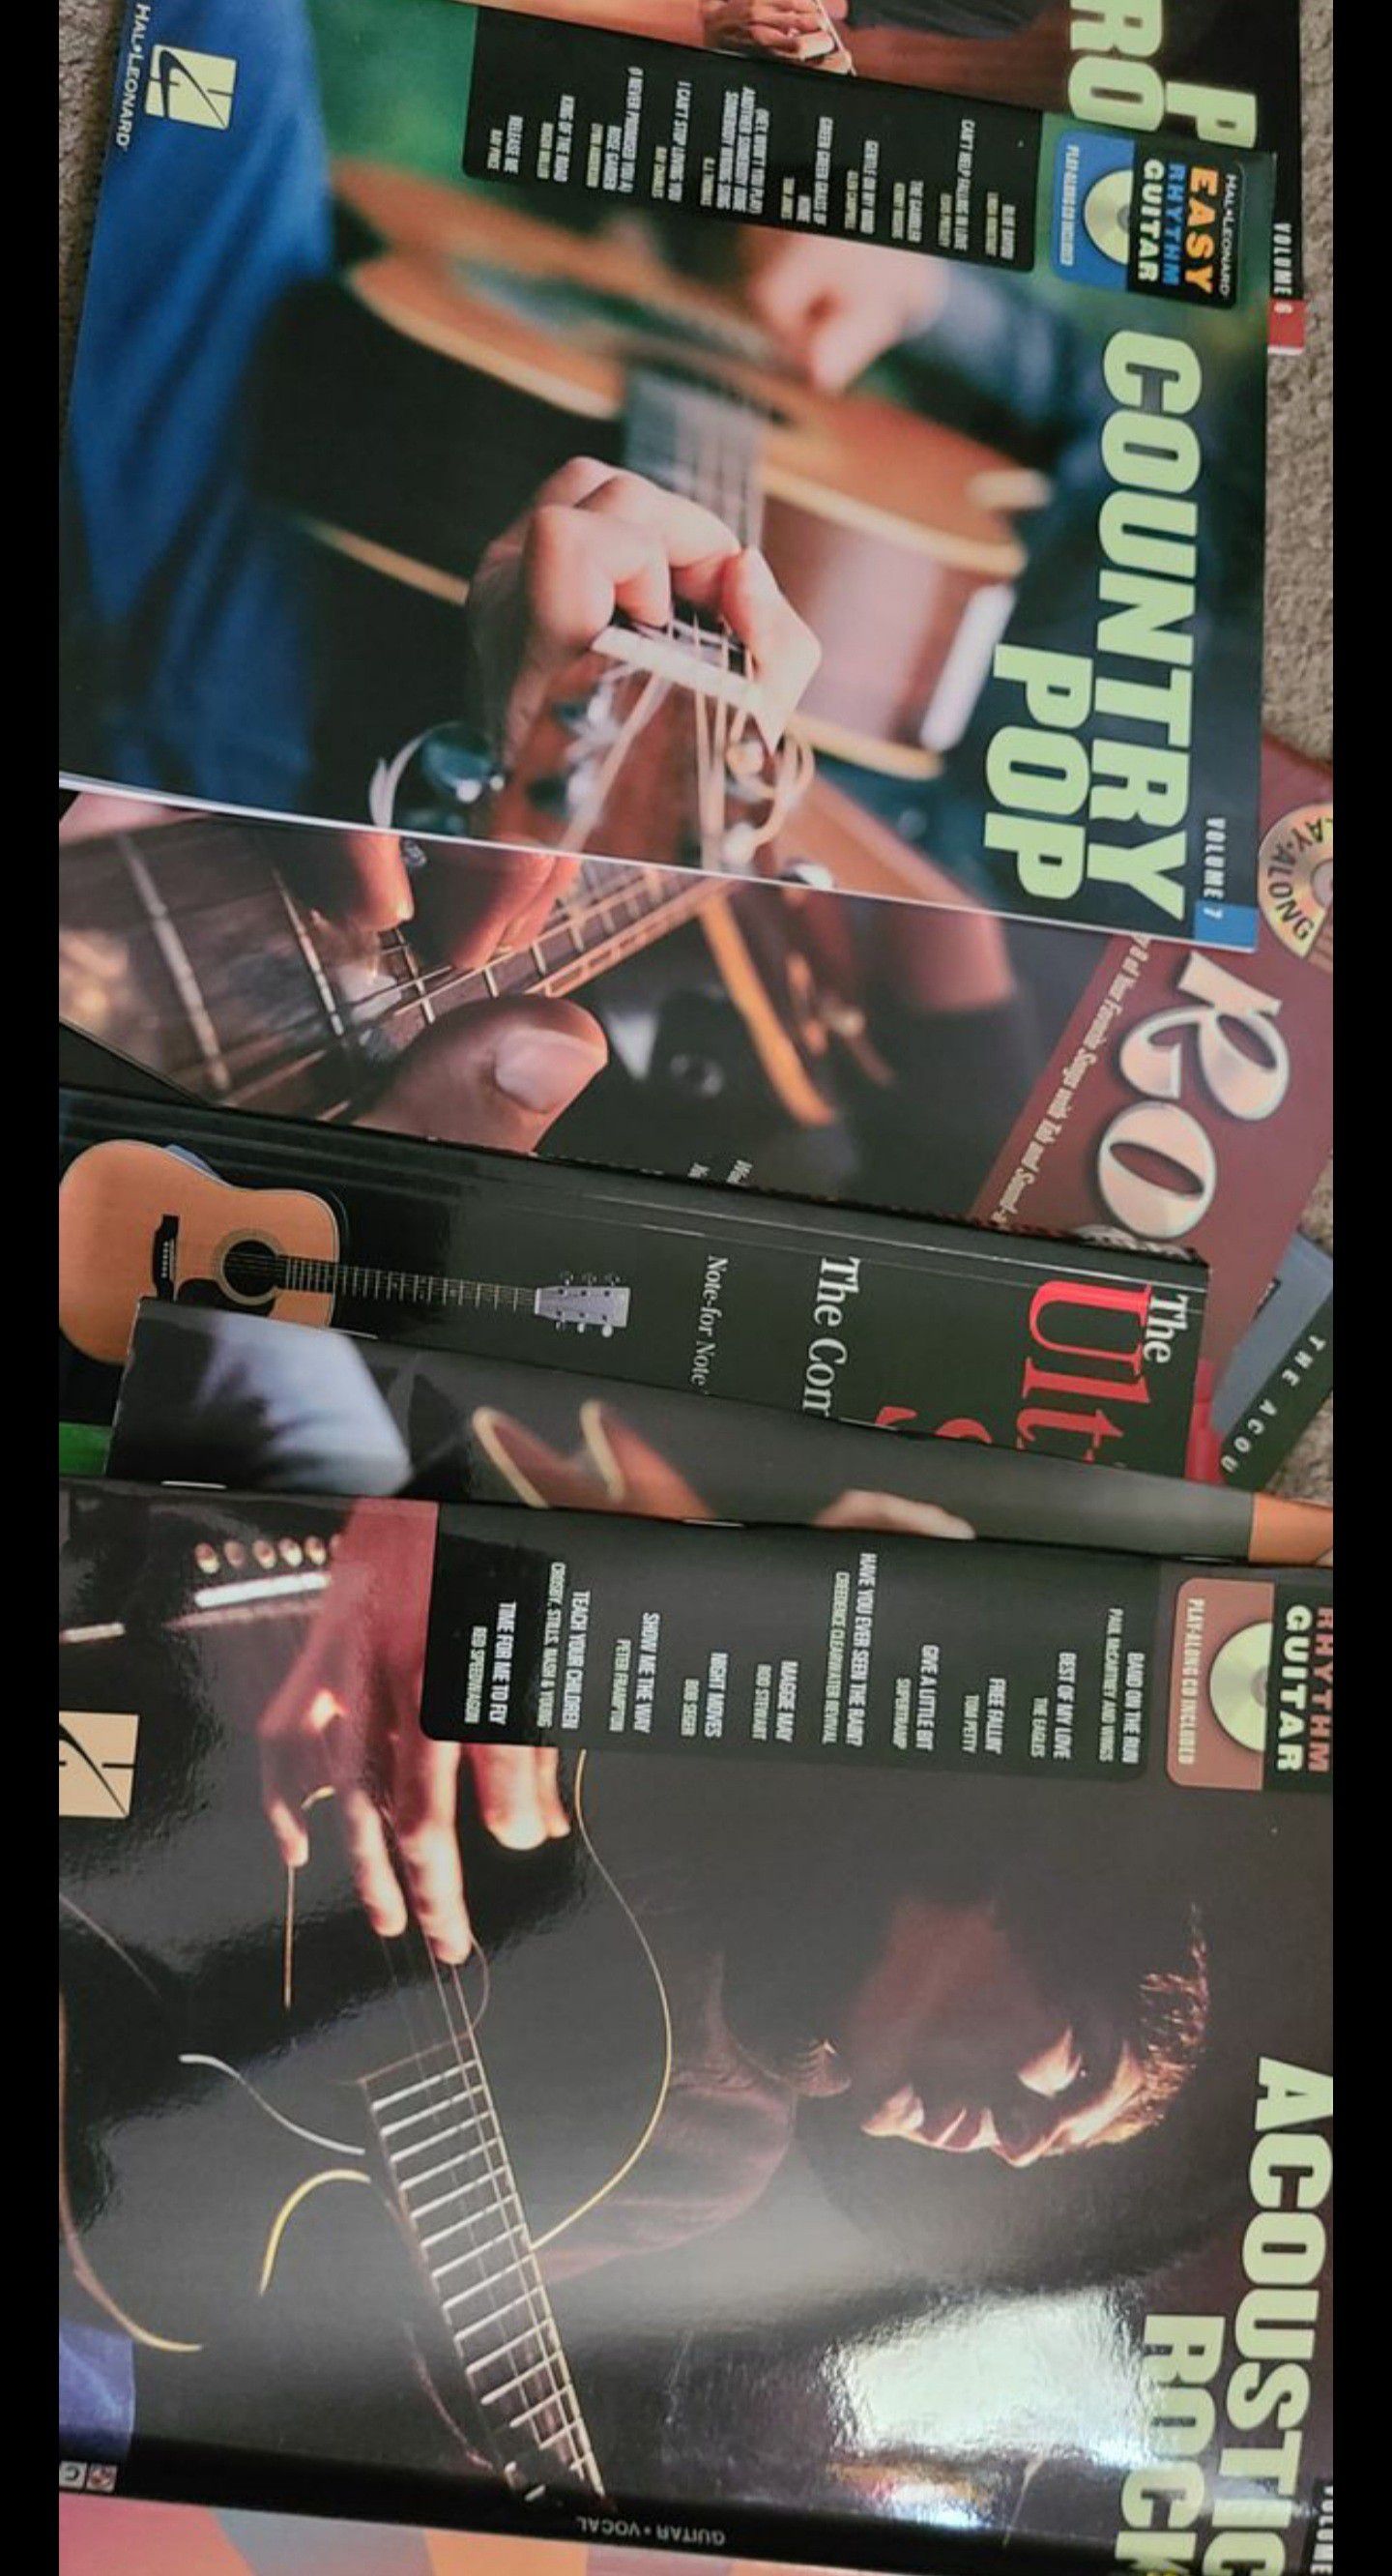 Guitar books